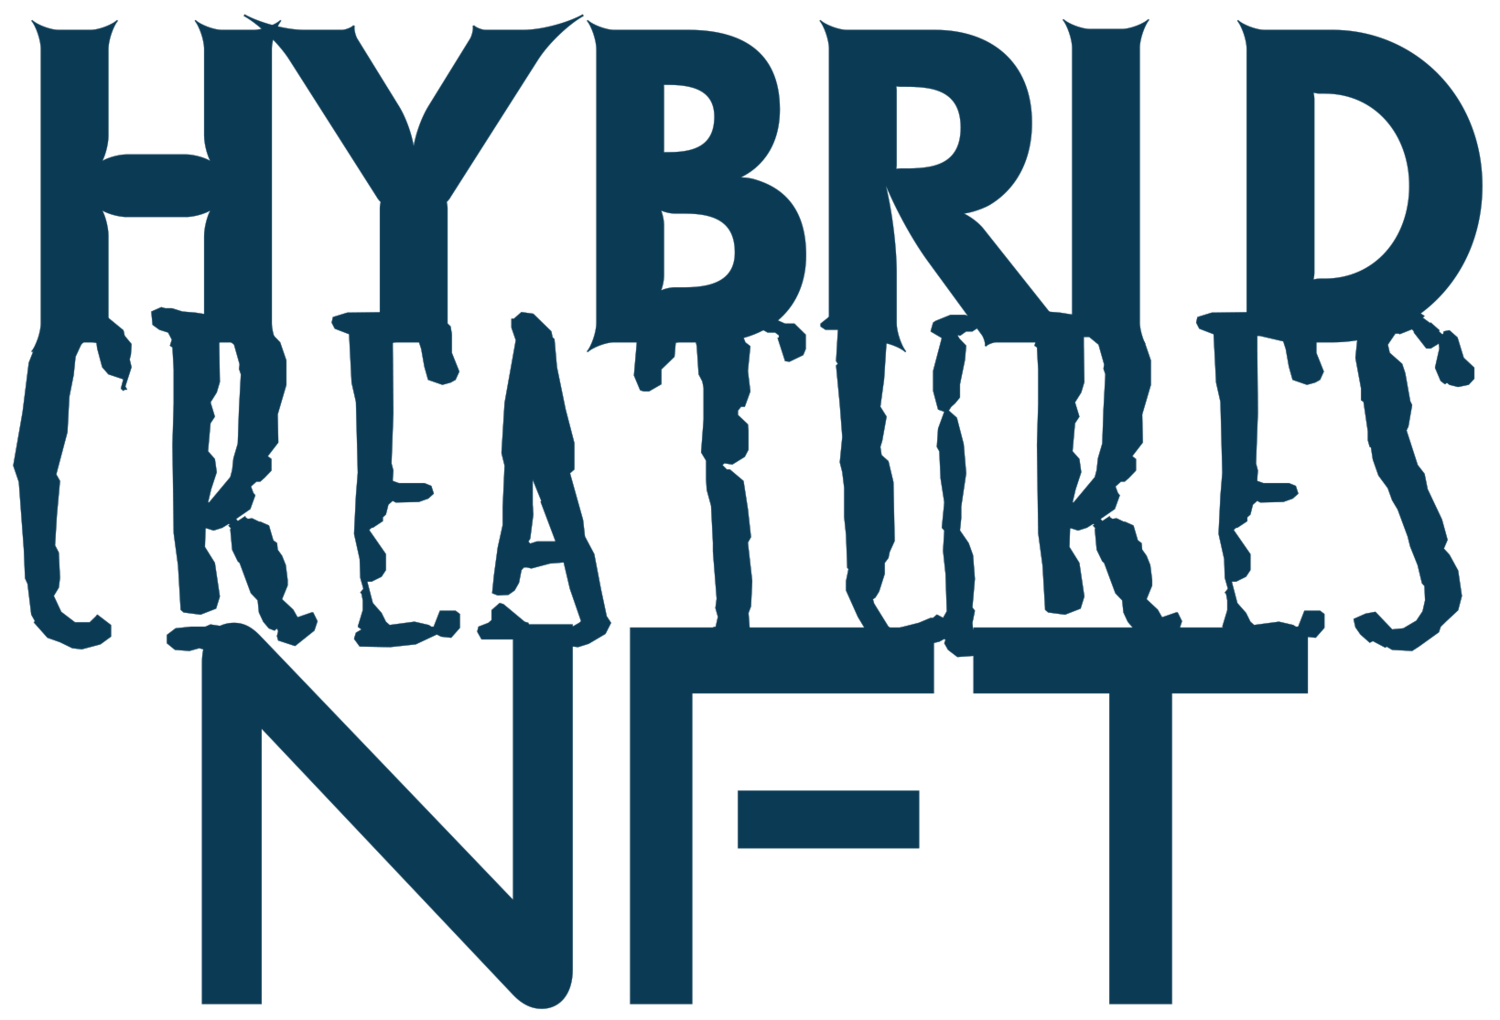 Hybrid Creatures NFT